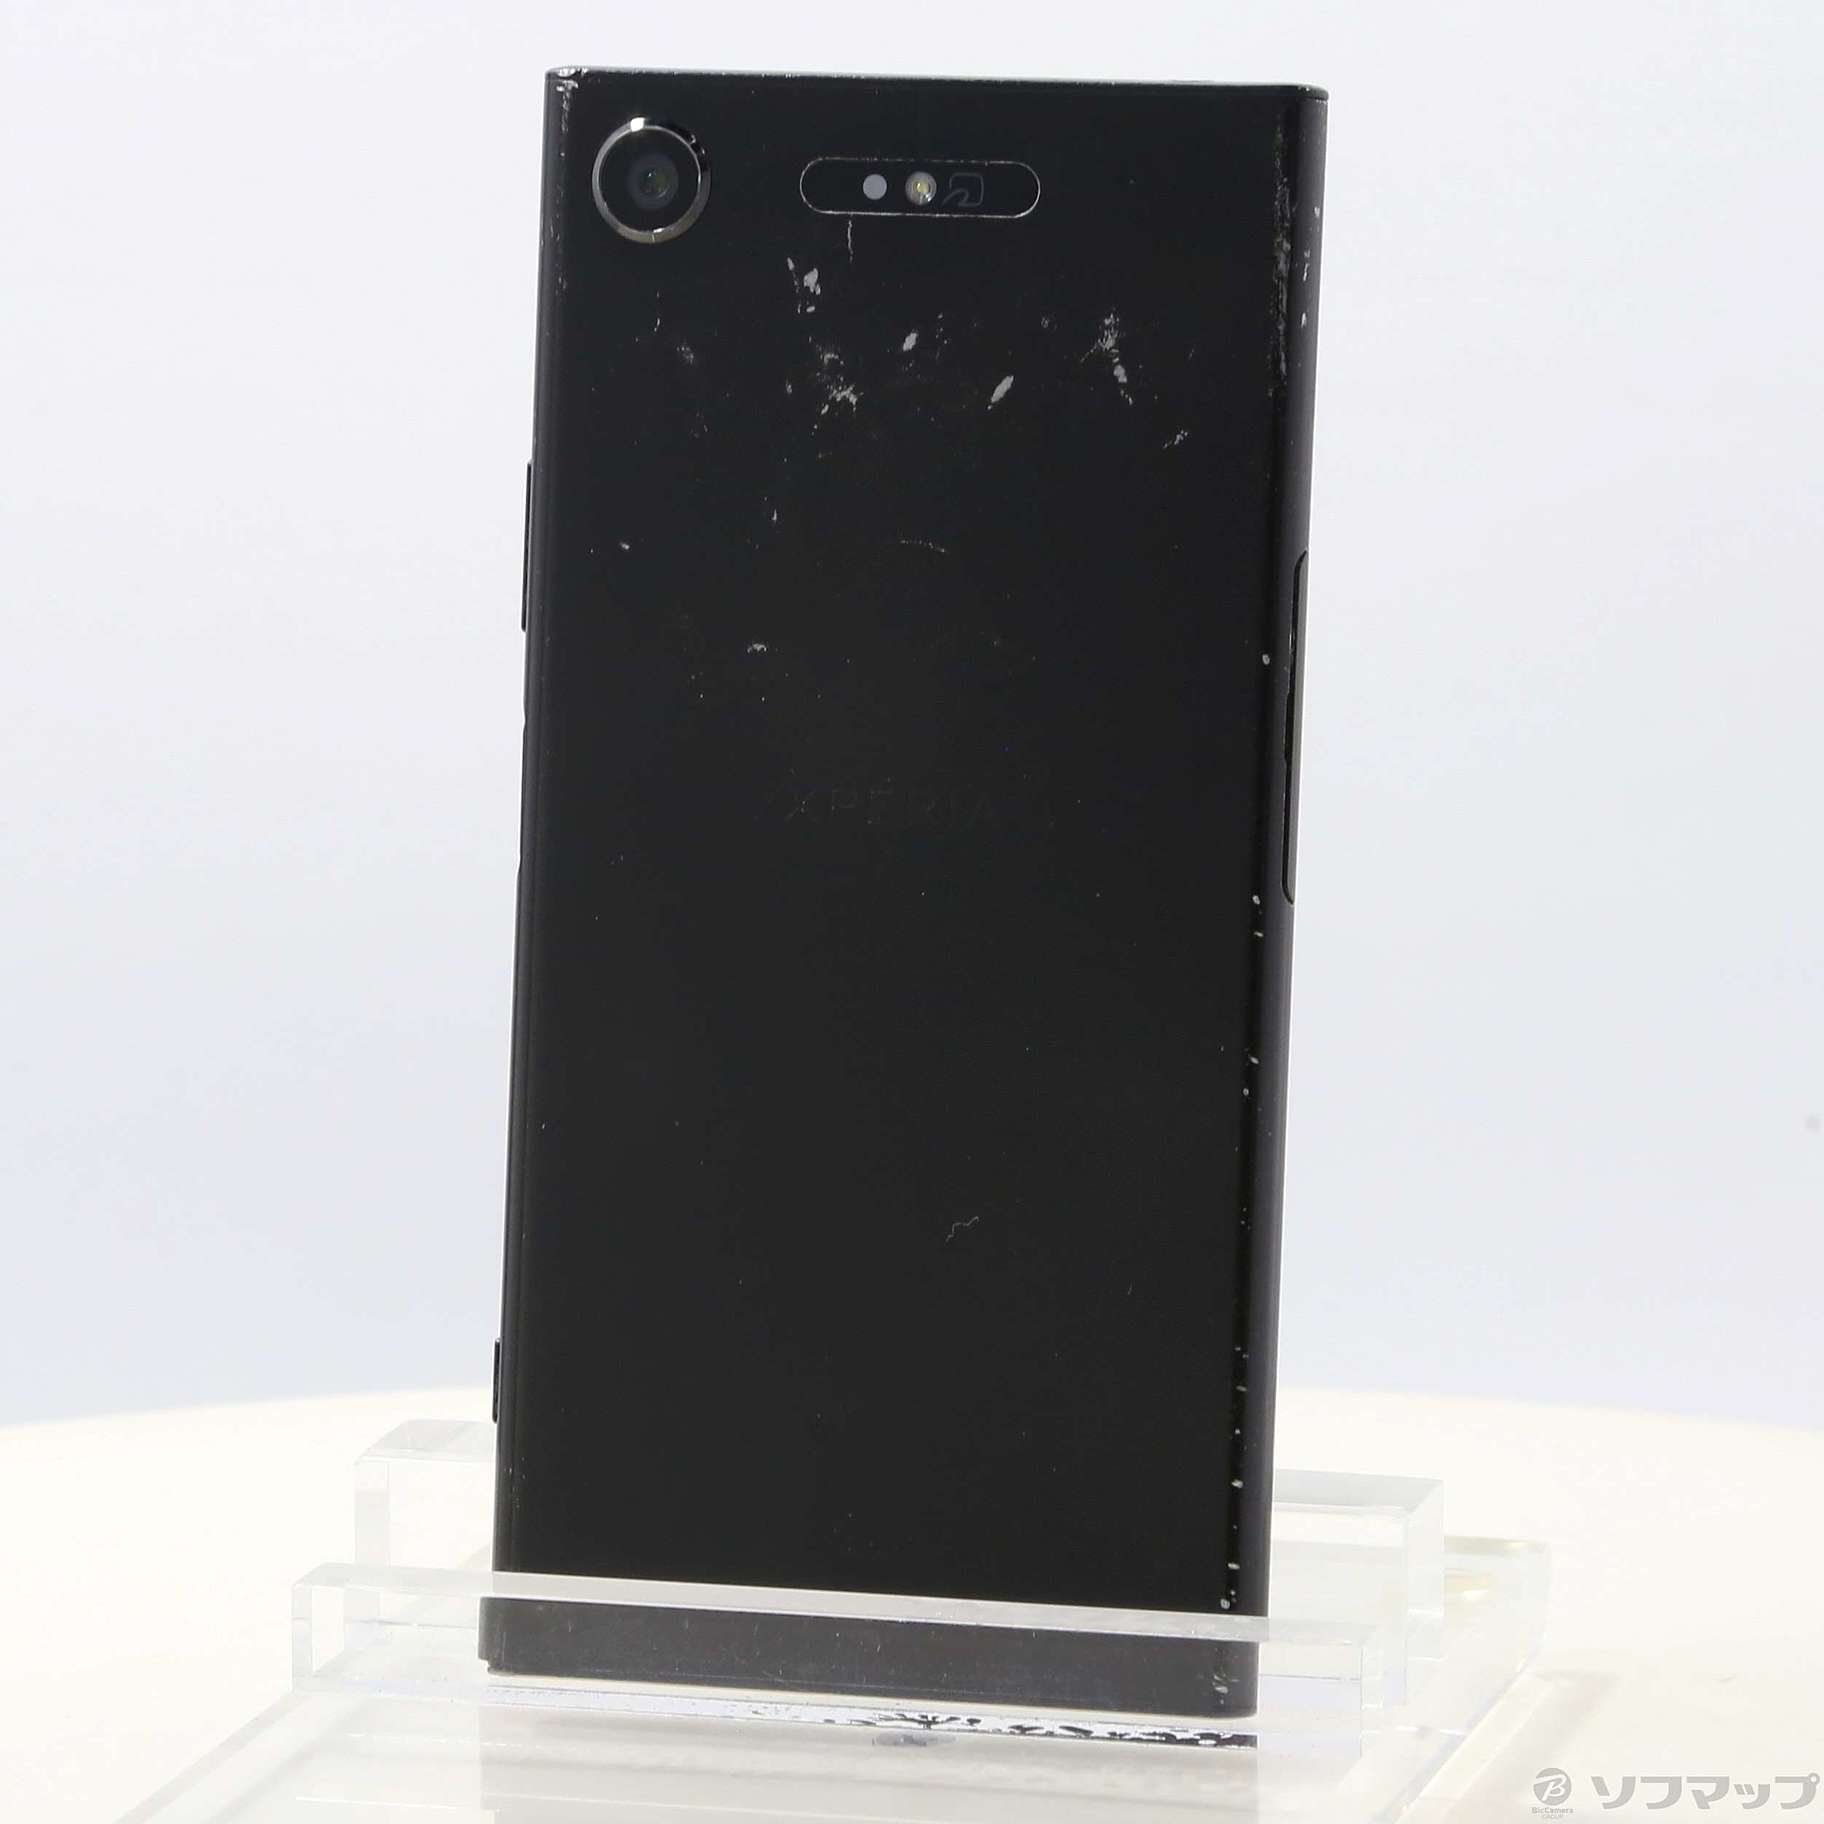 Xperia XZ1 Black 64GB au